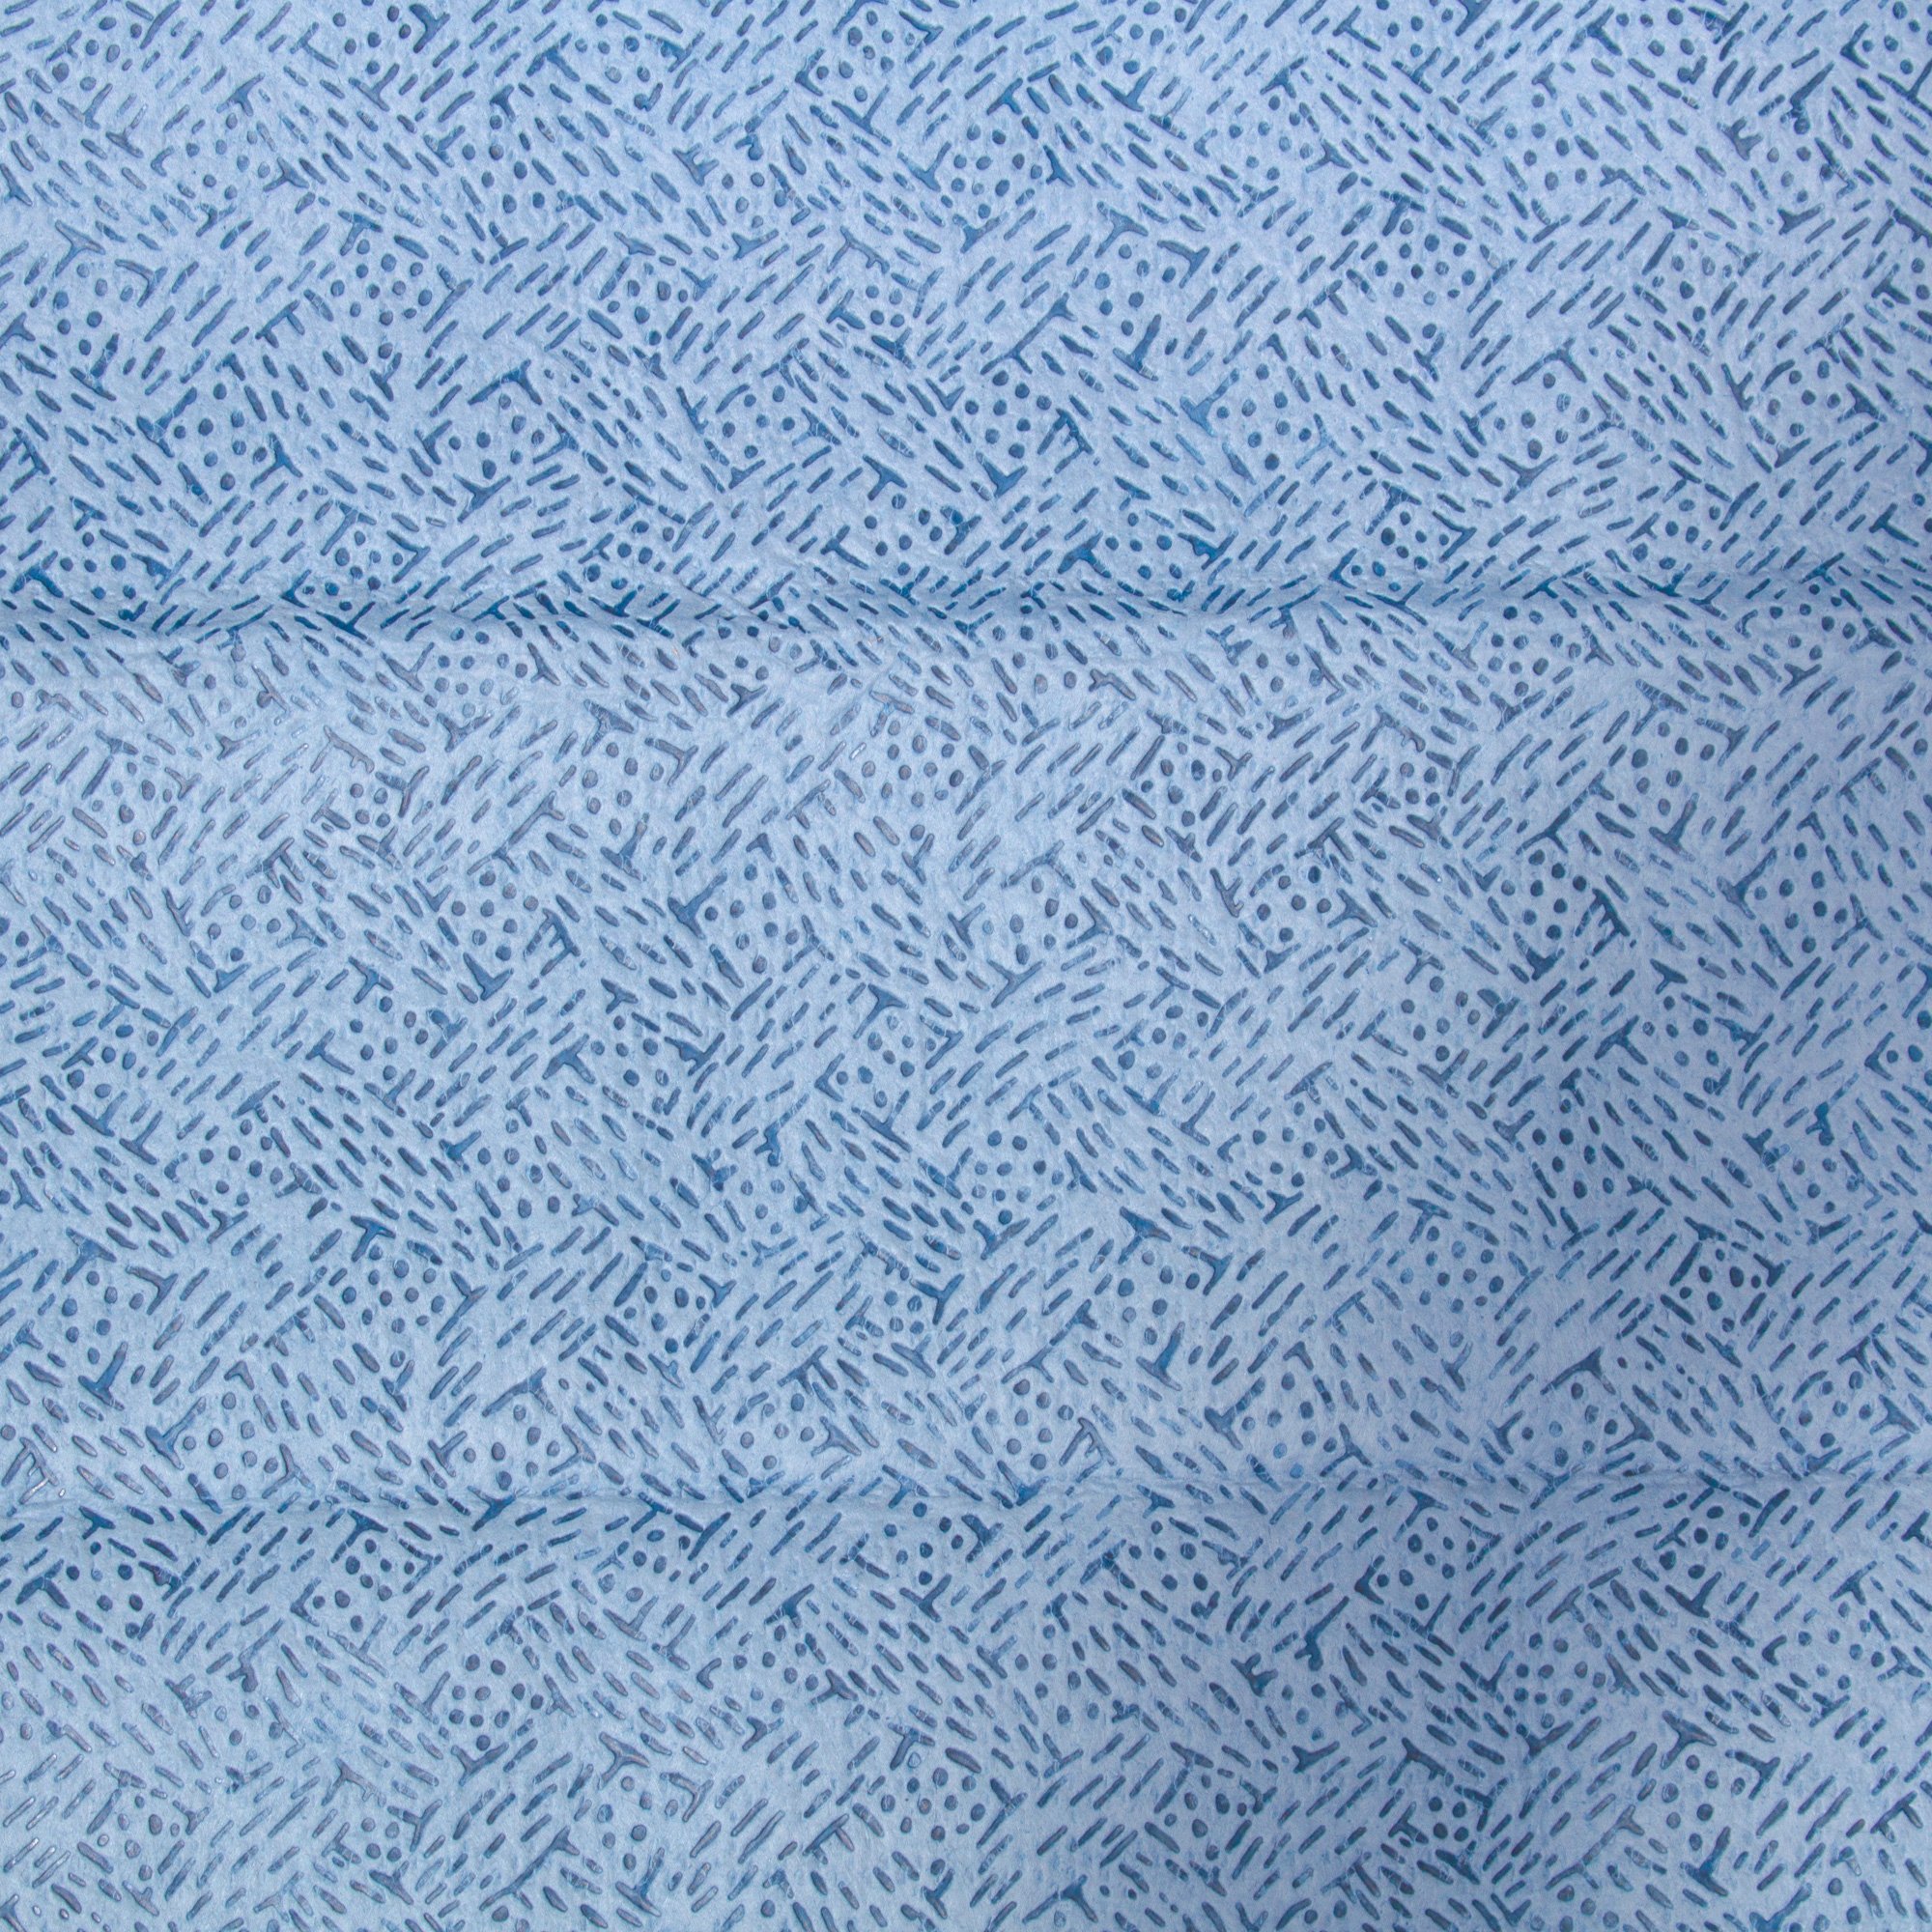 Kimtech Prep 7644 Prozeßwischtücher blau in der BRAG Box, 30,5 x 42,5 cm, 160 Tücher